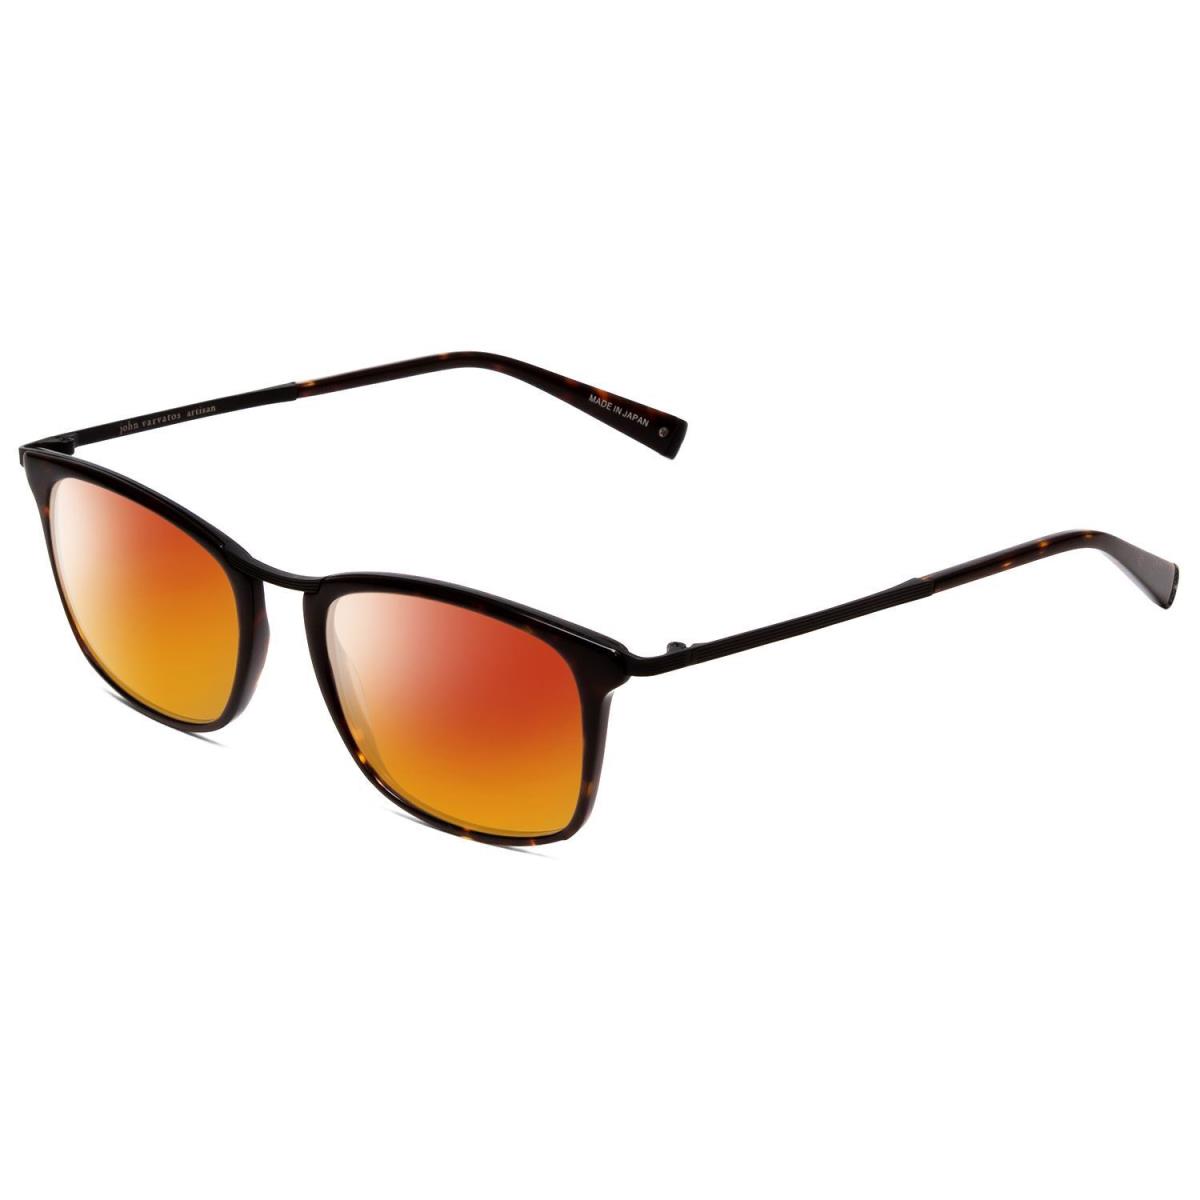 John Varvatos V375 Classic Designer Polarized Sunglasses in Brown 53mm 4 Options